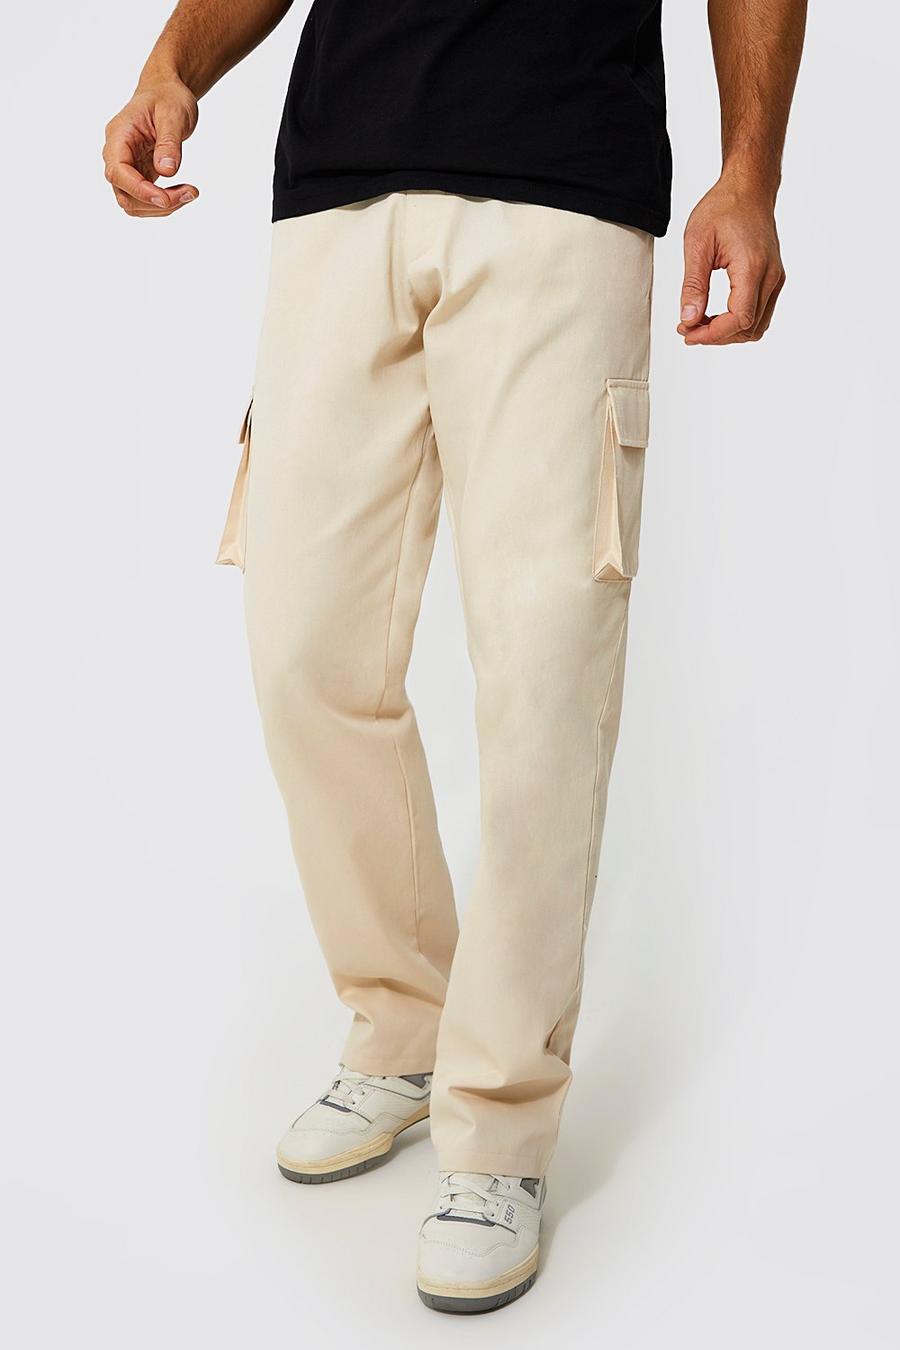 Pantaloni Chino Tall stile Cargo rilassati, Ecru white